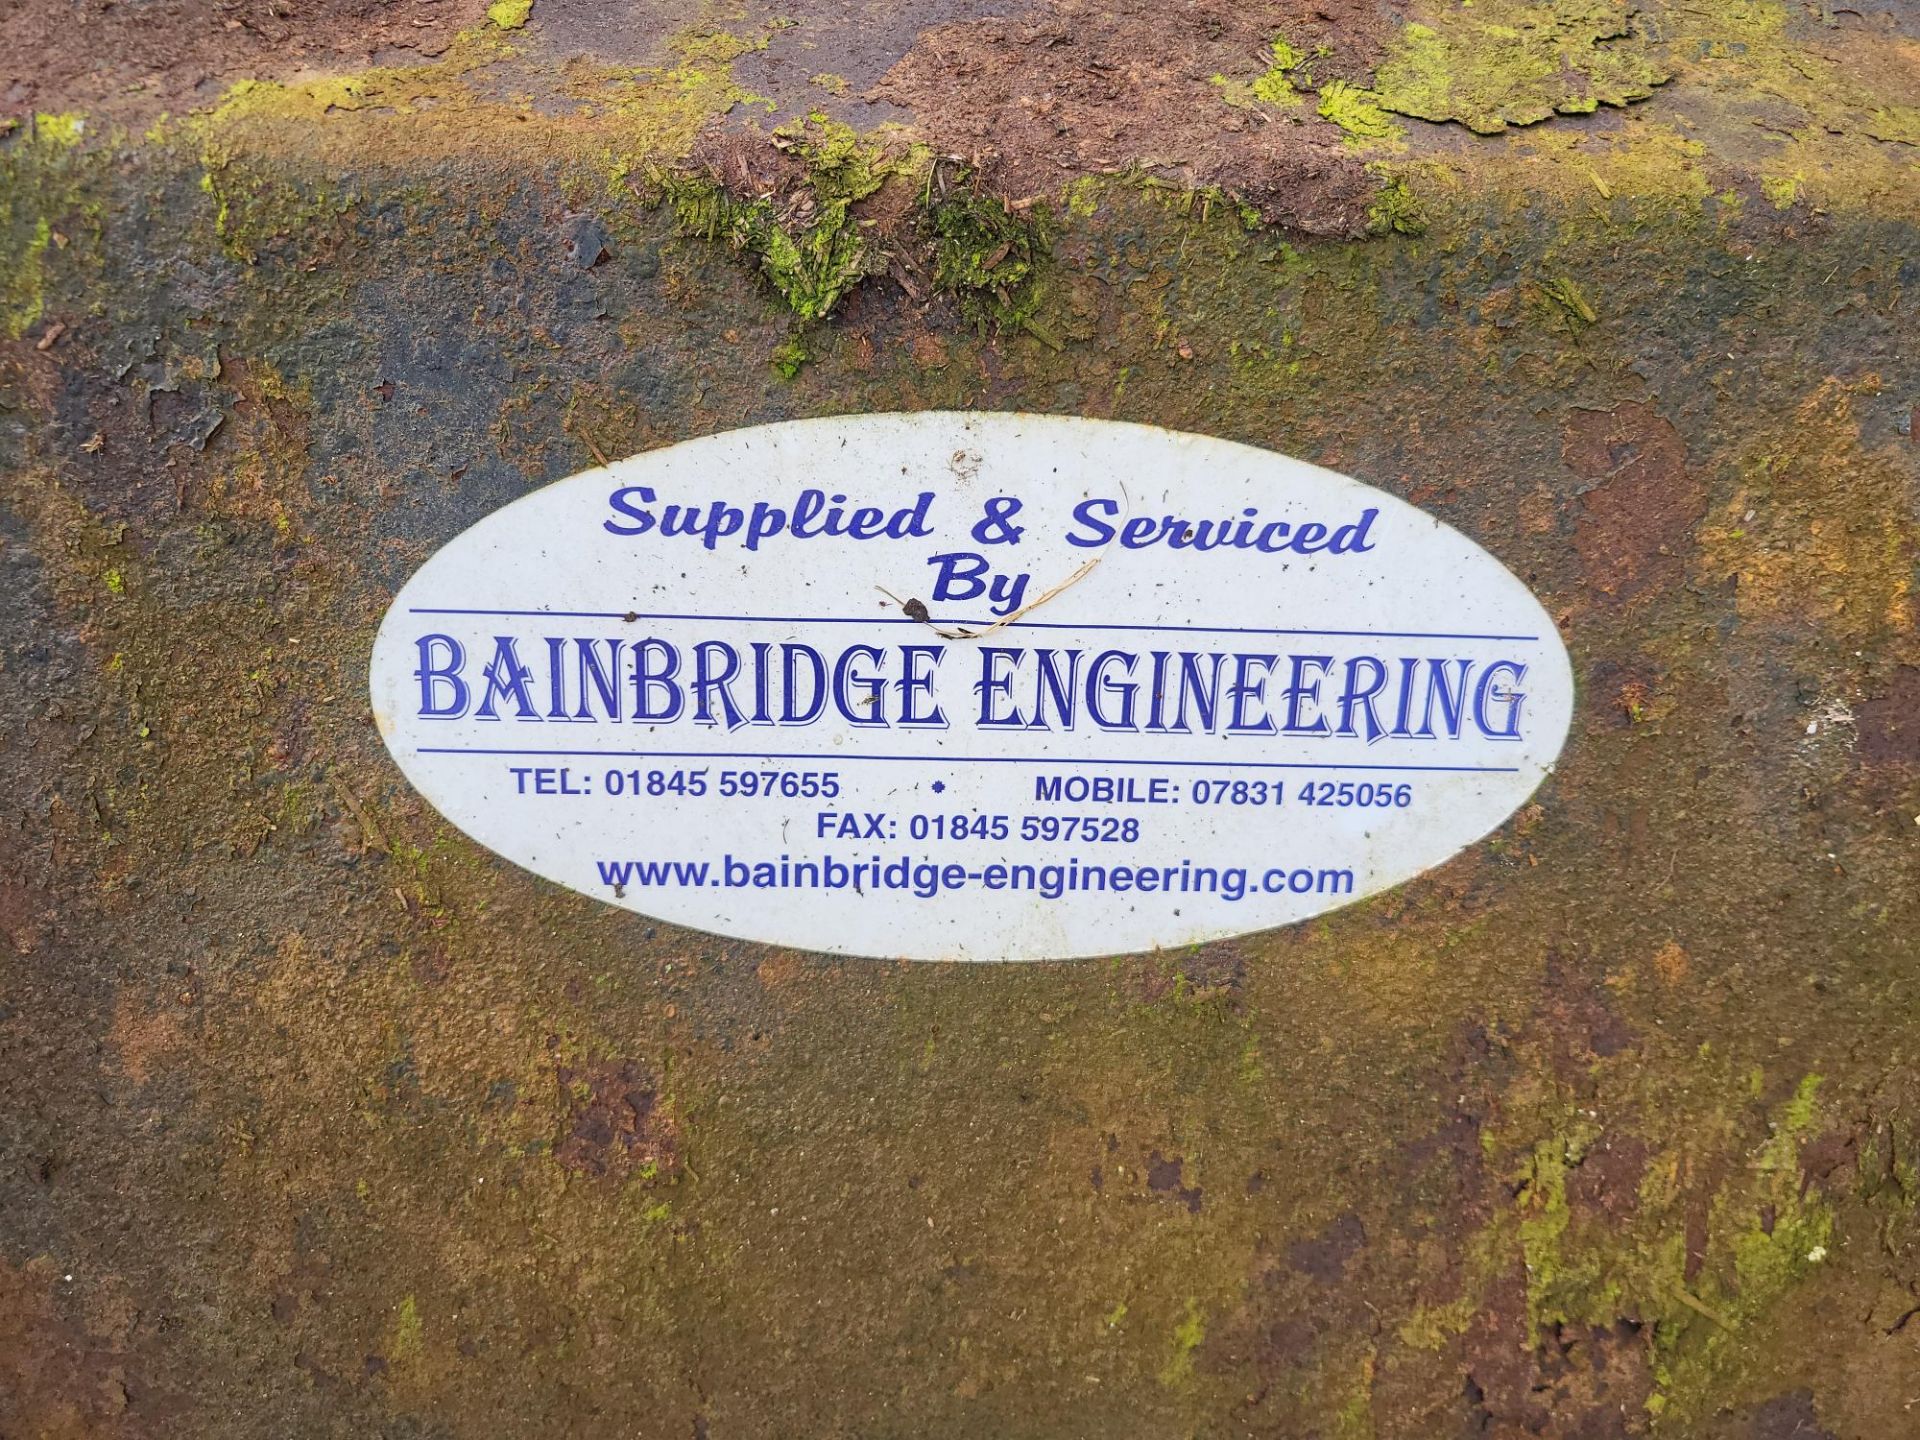 1, Bainbridge Engineering 2.3m Bucket (Damaged) - Image 3 of 3